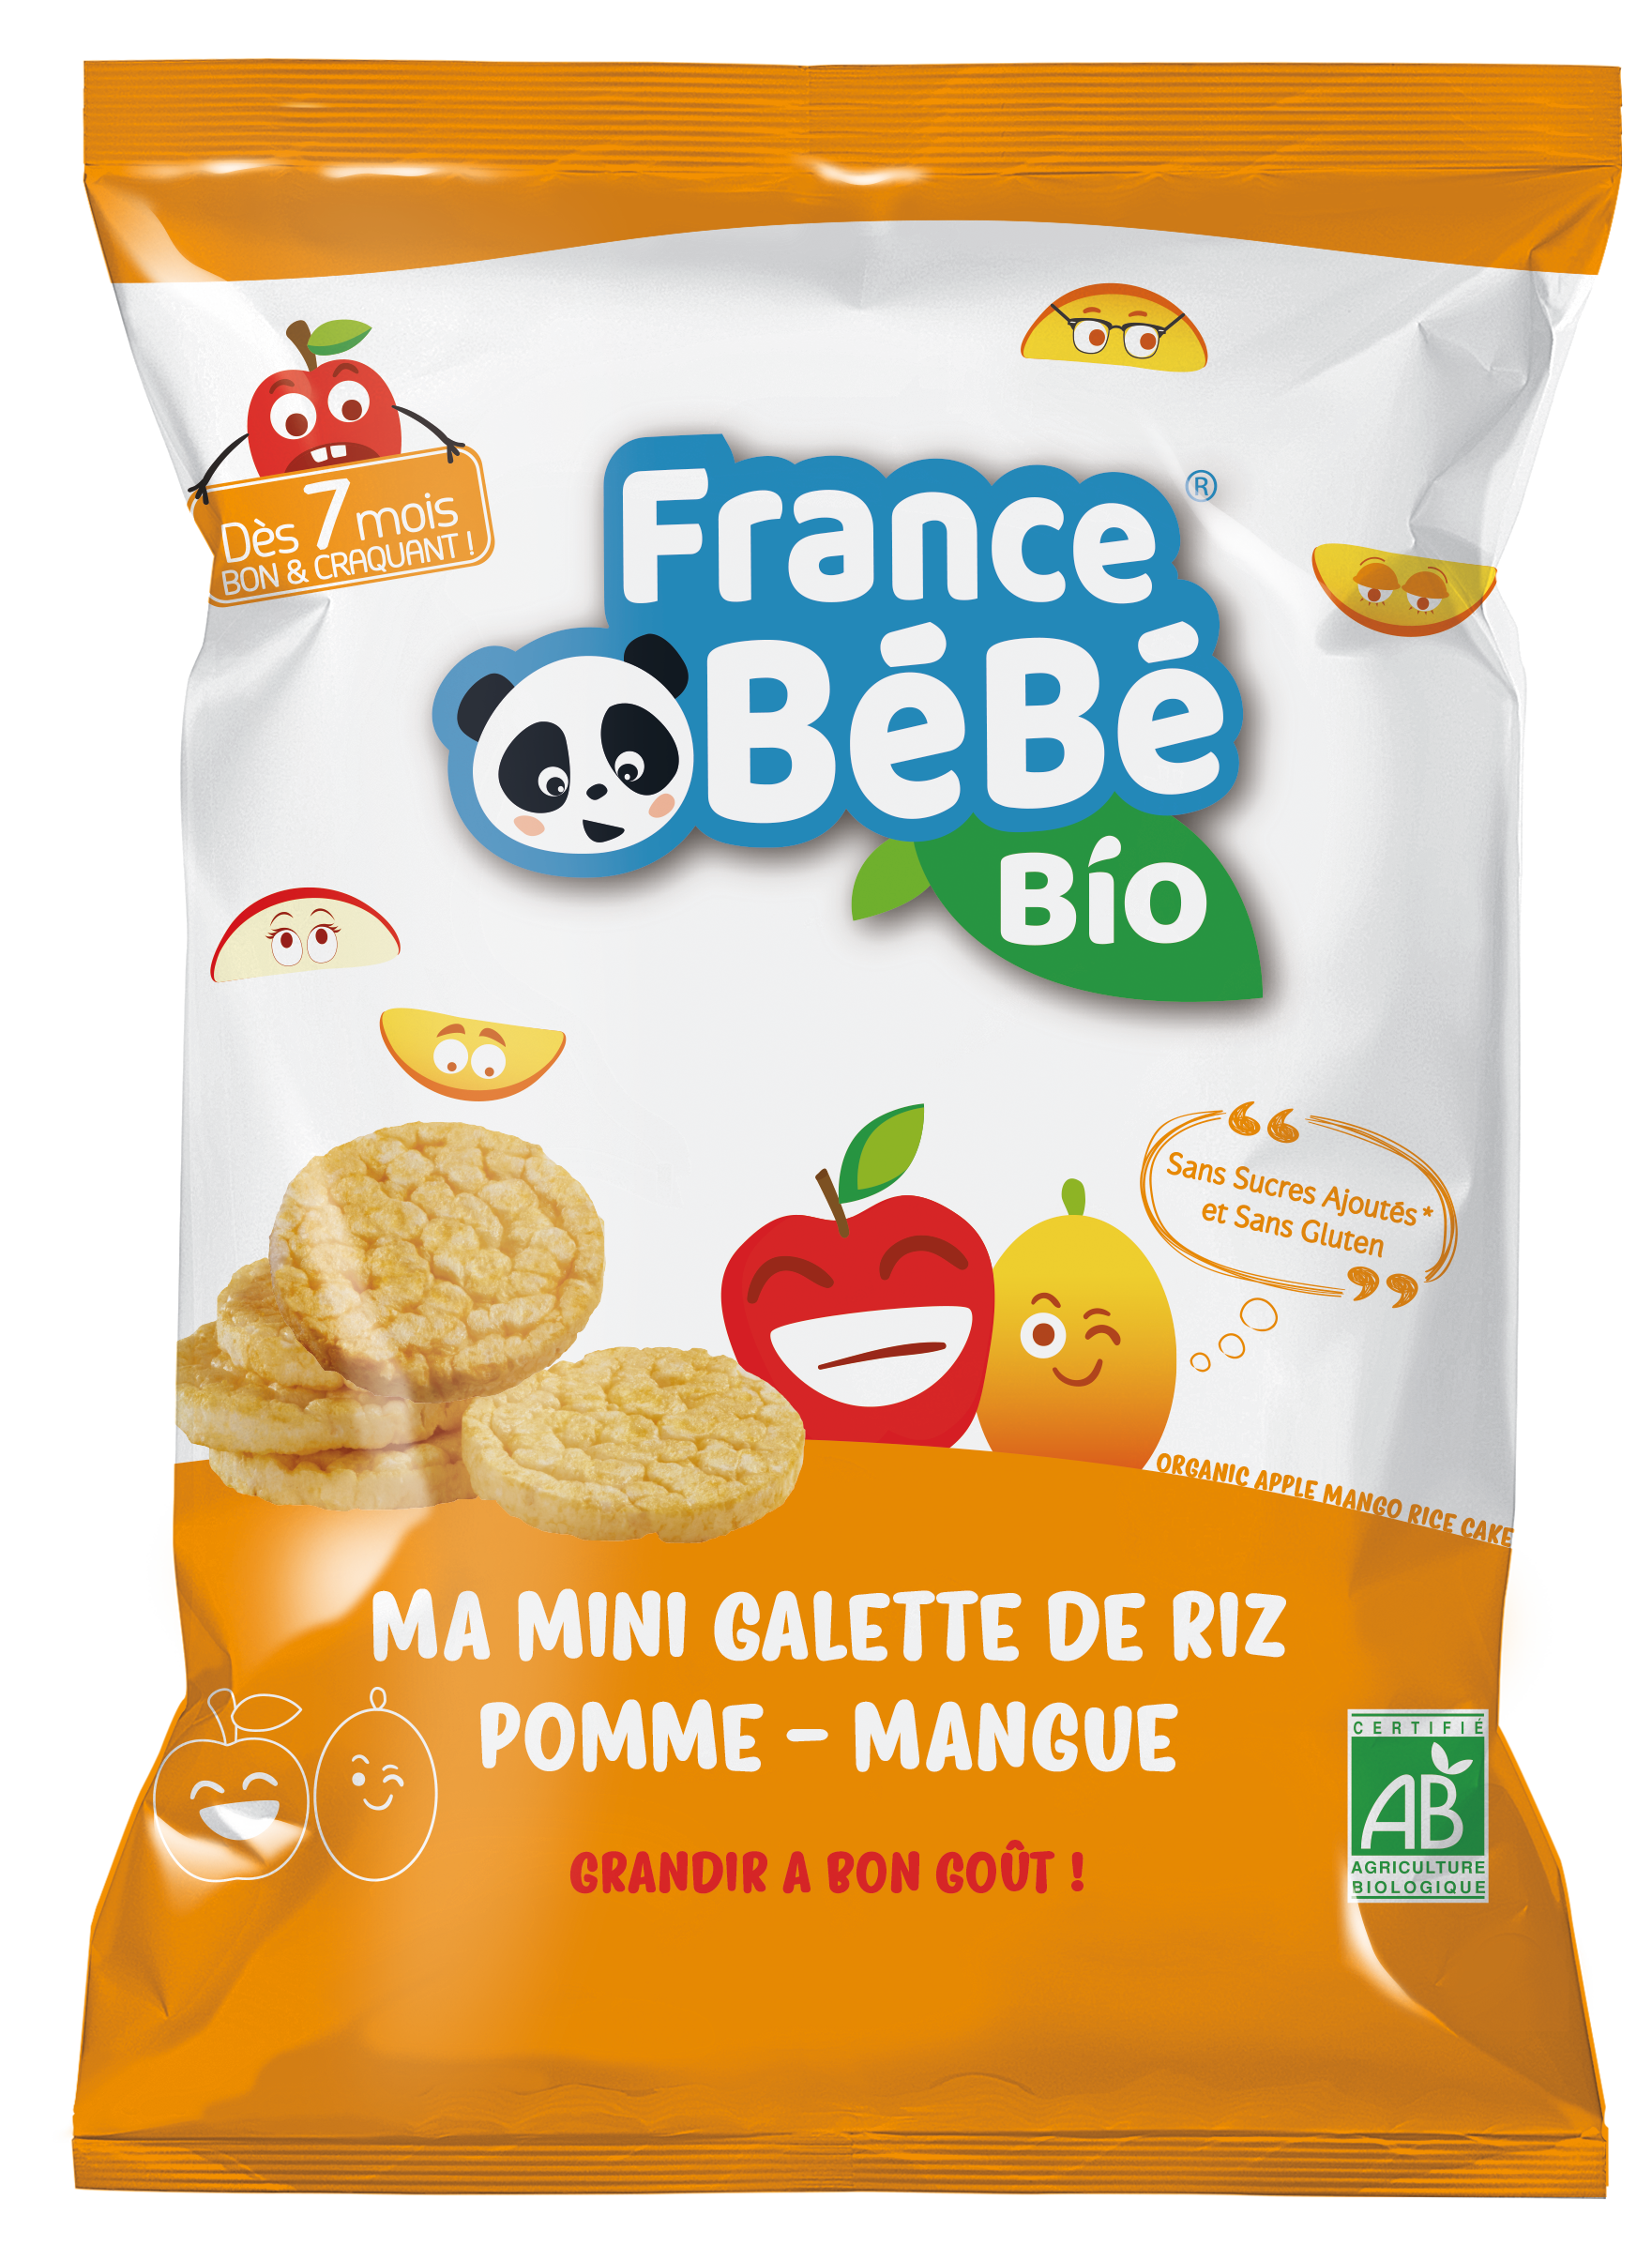 https://www.yolobaby.fr/images/Image/Mini-galette-de-riz-Pomme-Mangue-France-bebe-Bio-3700653.png